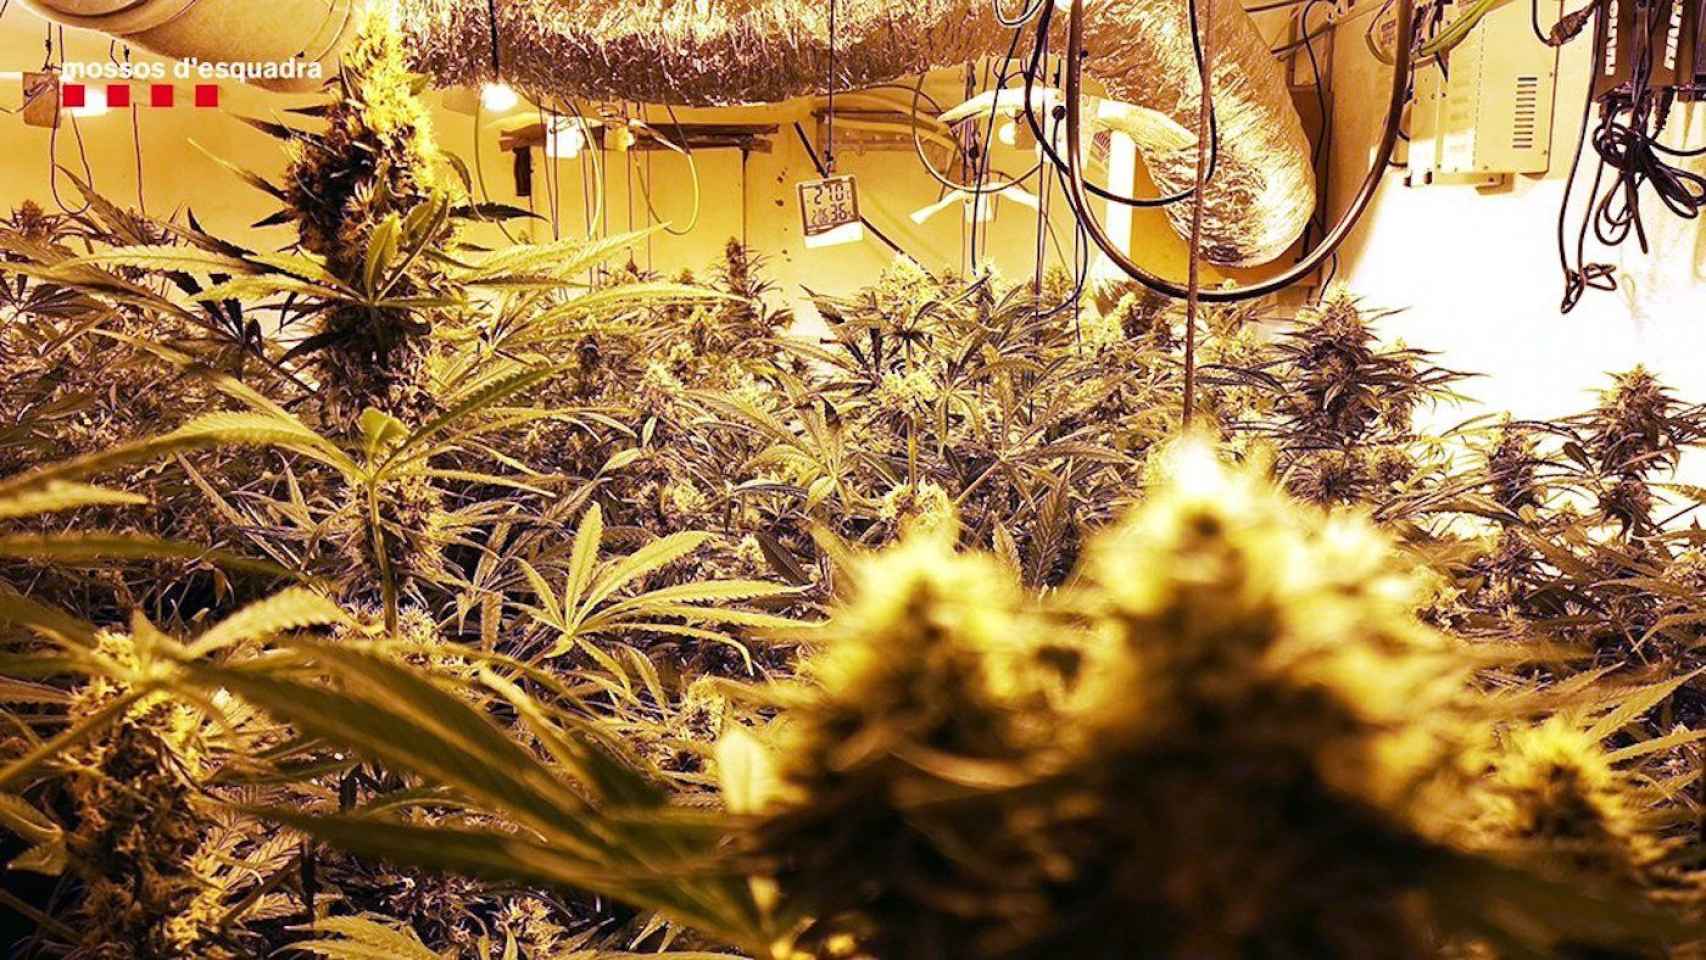 Imagen de archivo de una plantación de marihuana  / MOSSOS D'ESQUADRA